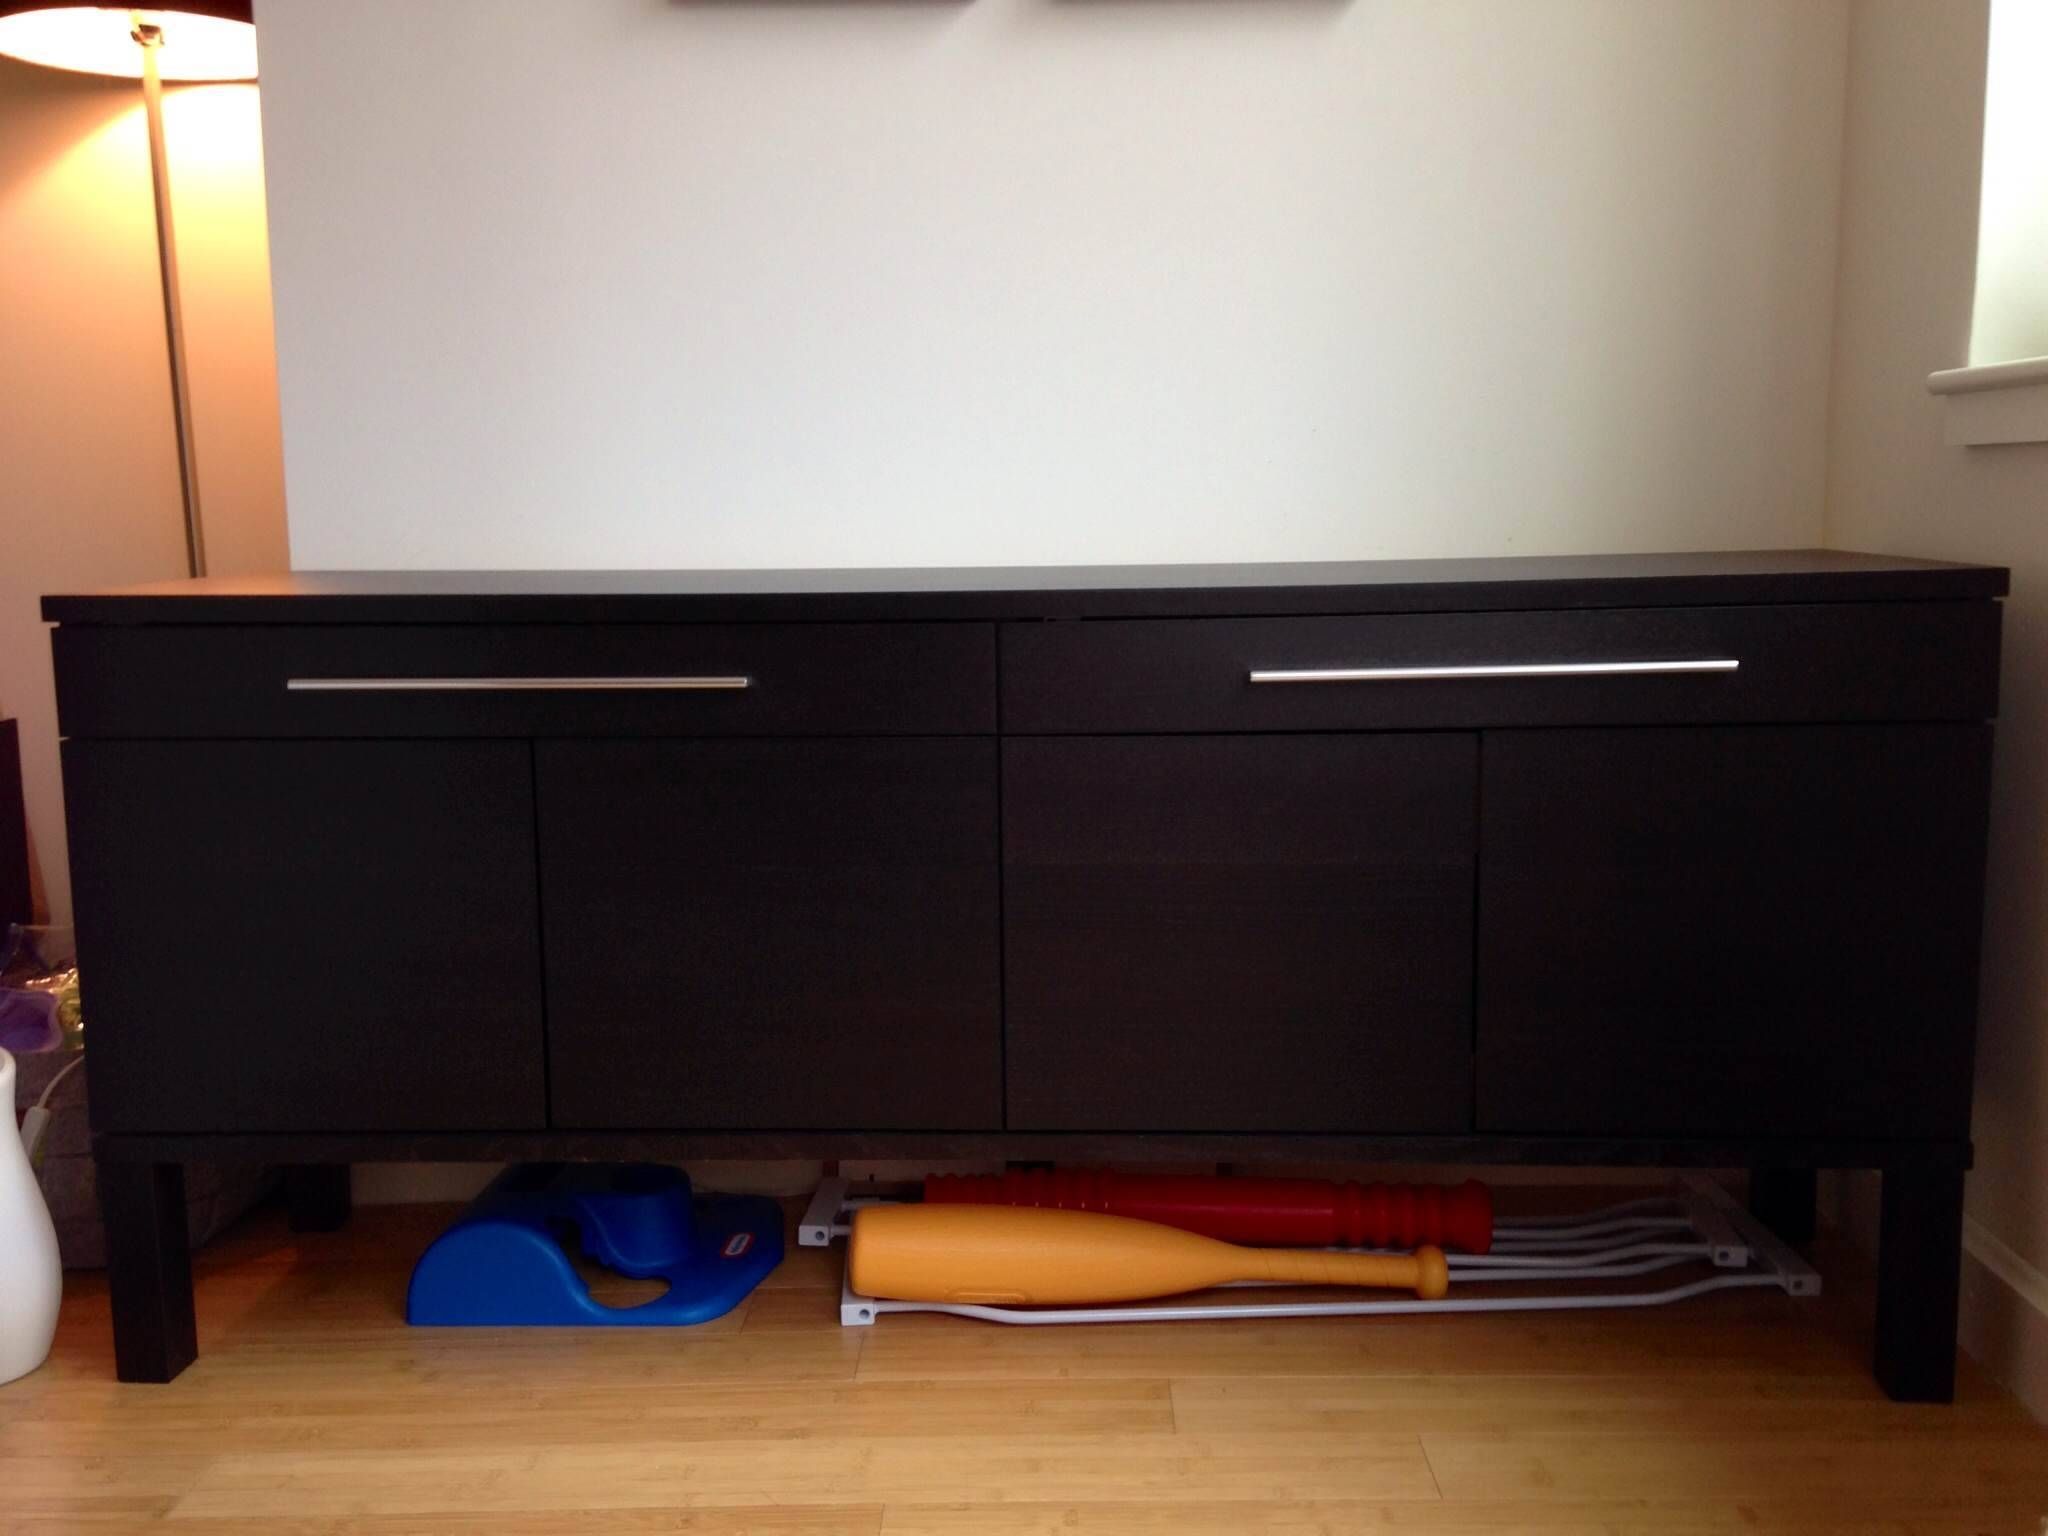 Ikea Bjursta Sideboard Dining Storage, Dark Brown – $100 | Too Big Pertaining To Most Up To Date Ikea Bjursta Sideboards (Photo 4 of 15)